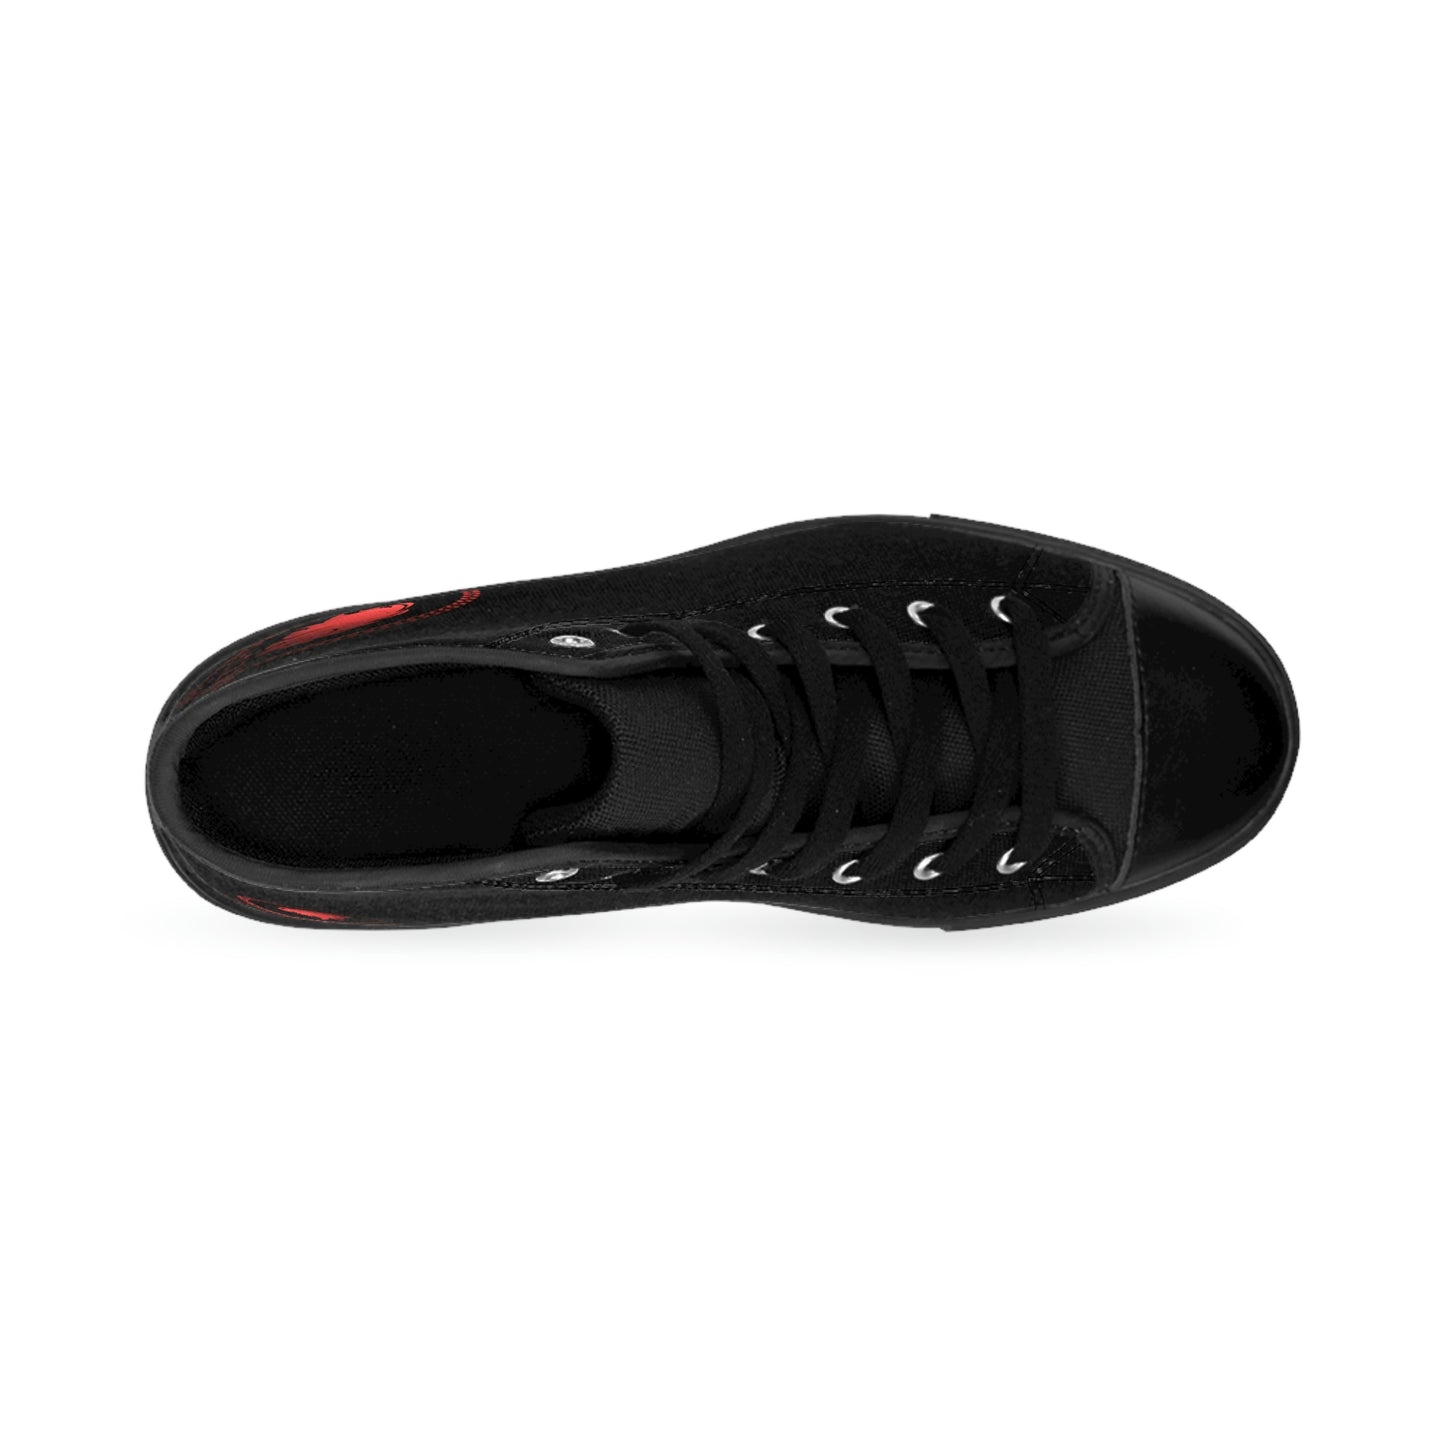 Red/Black Men's Classic Sneakers